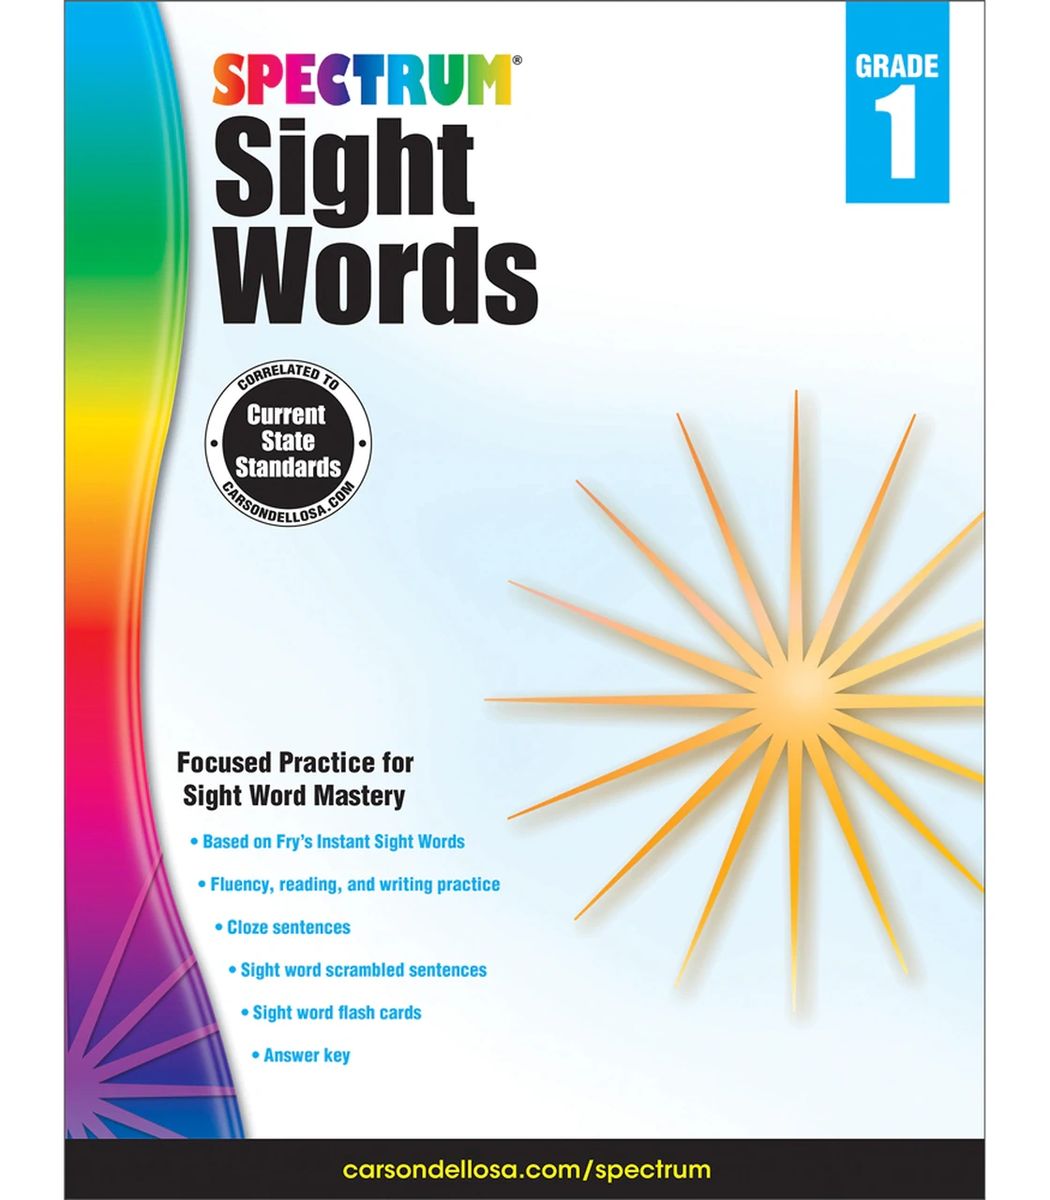 spectrum-sight-words-grade-1